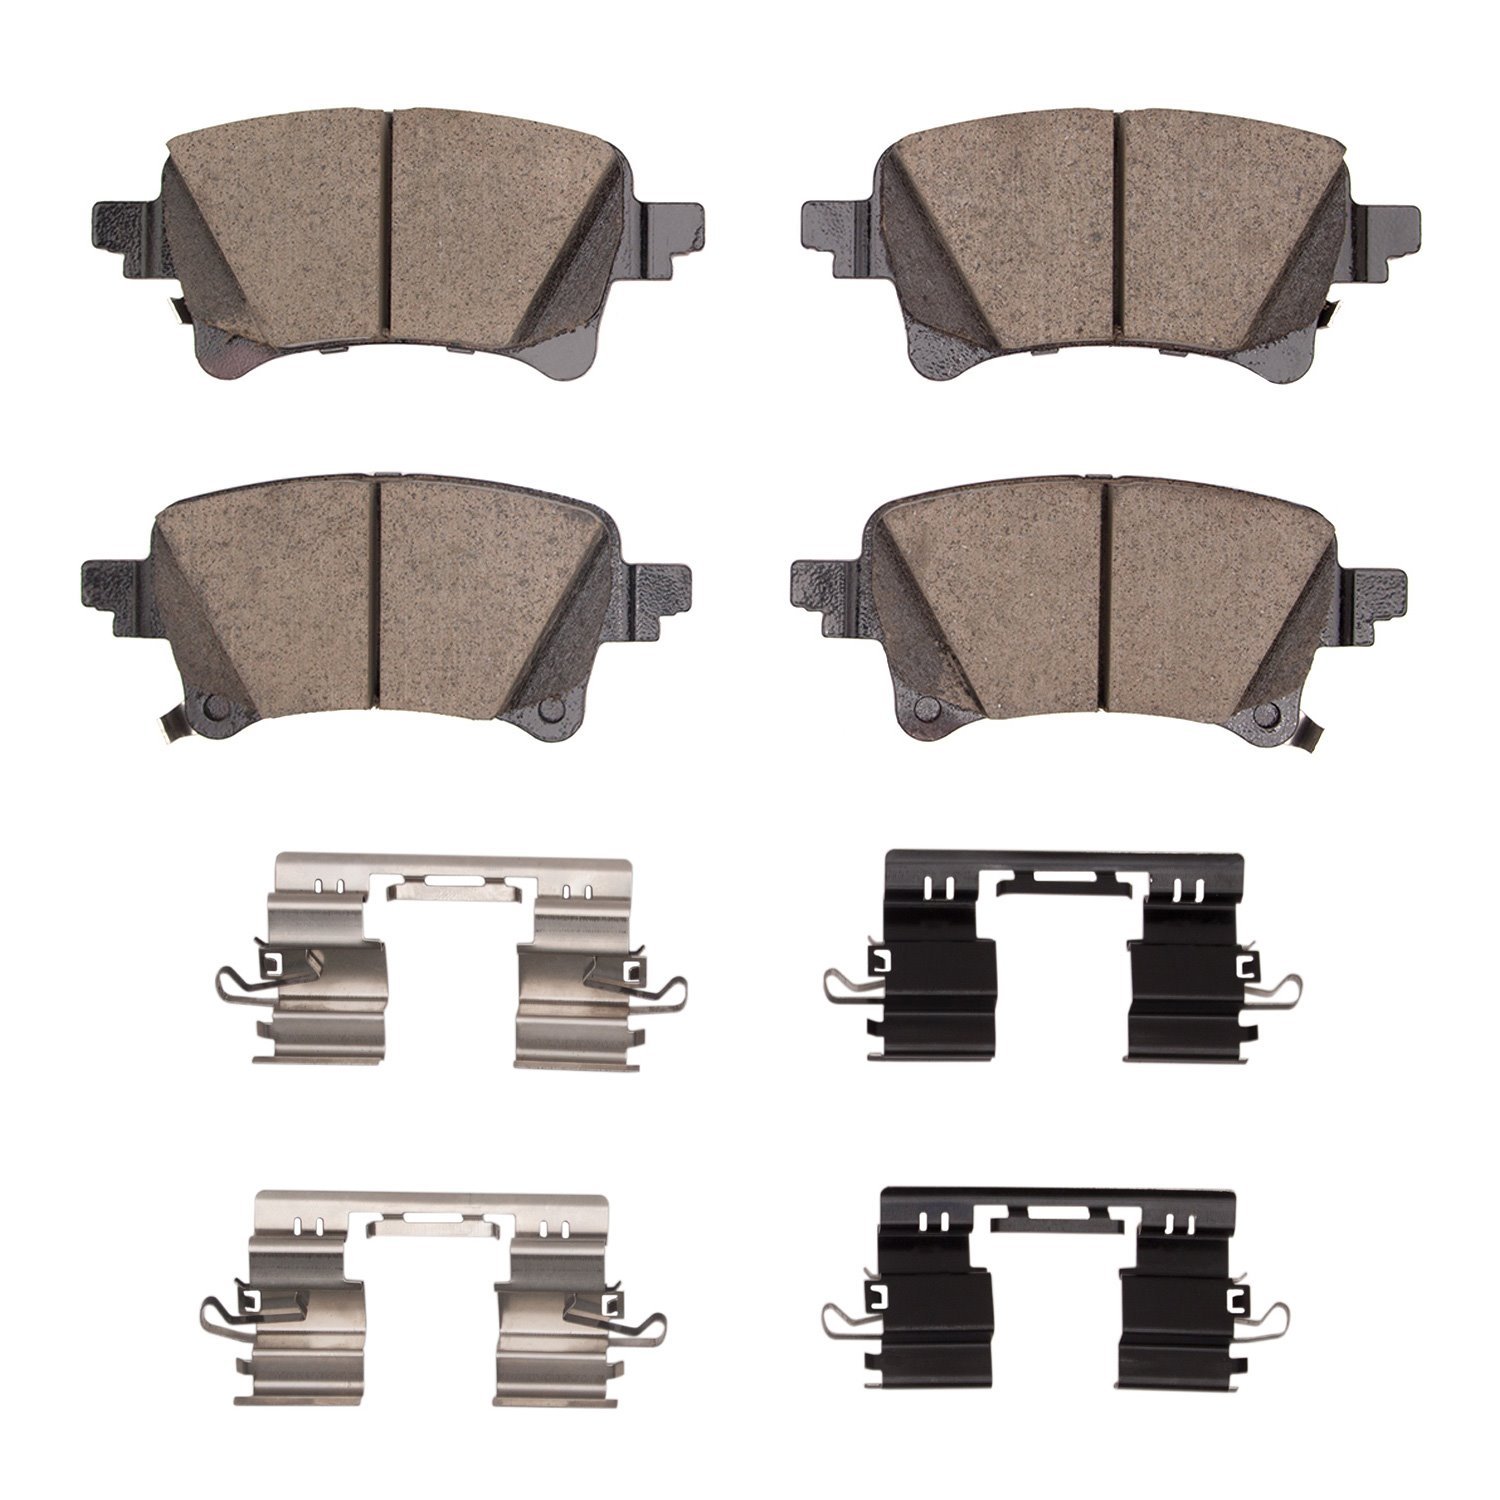 1400-2233-01 Ultimate-Duty Brake Pads & Hardware Kit, Fits Select Mopar, Position: Rear